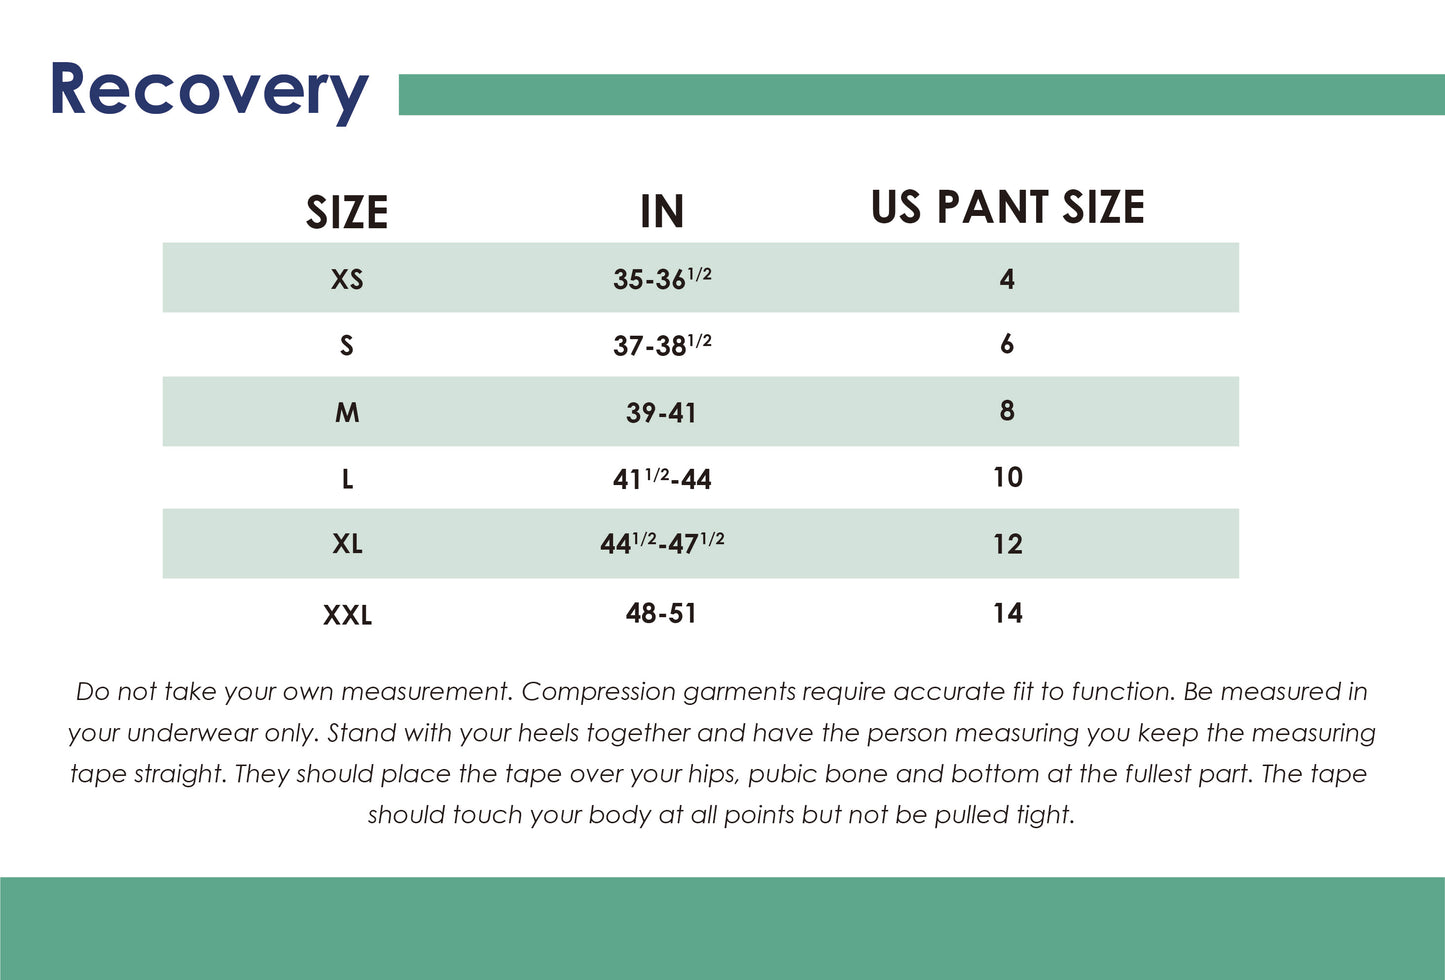 SRC Recovery Shorts - Mini Length